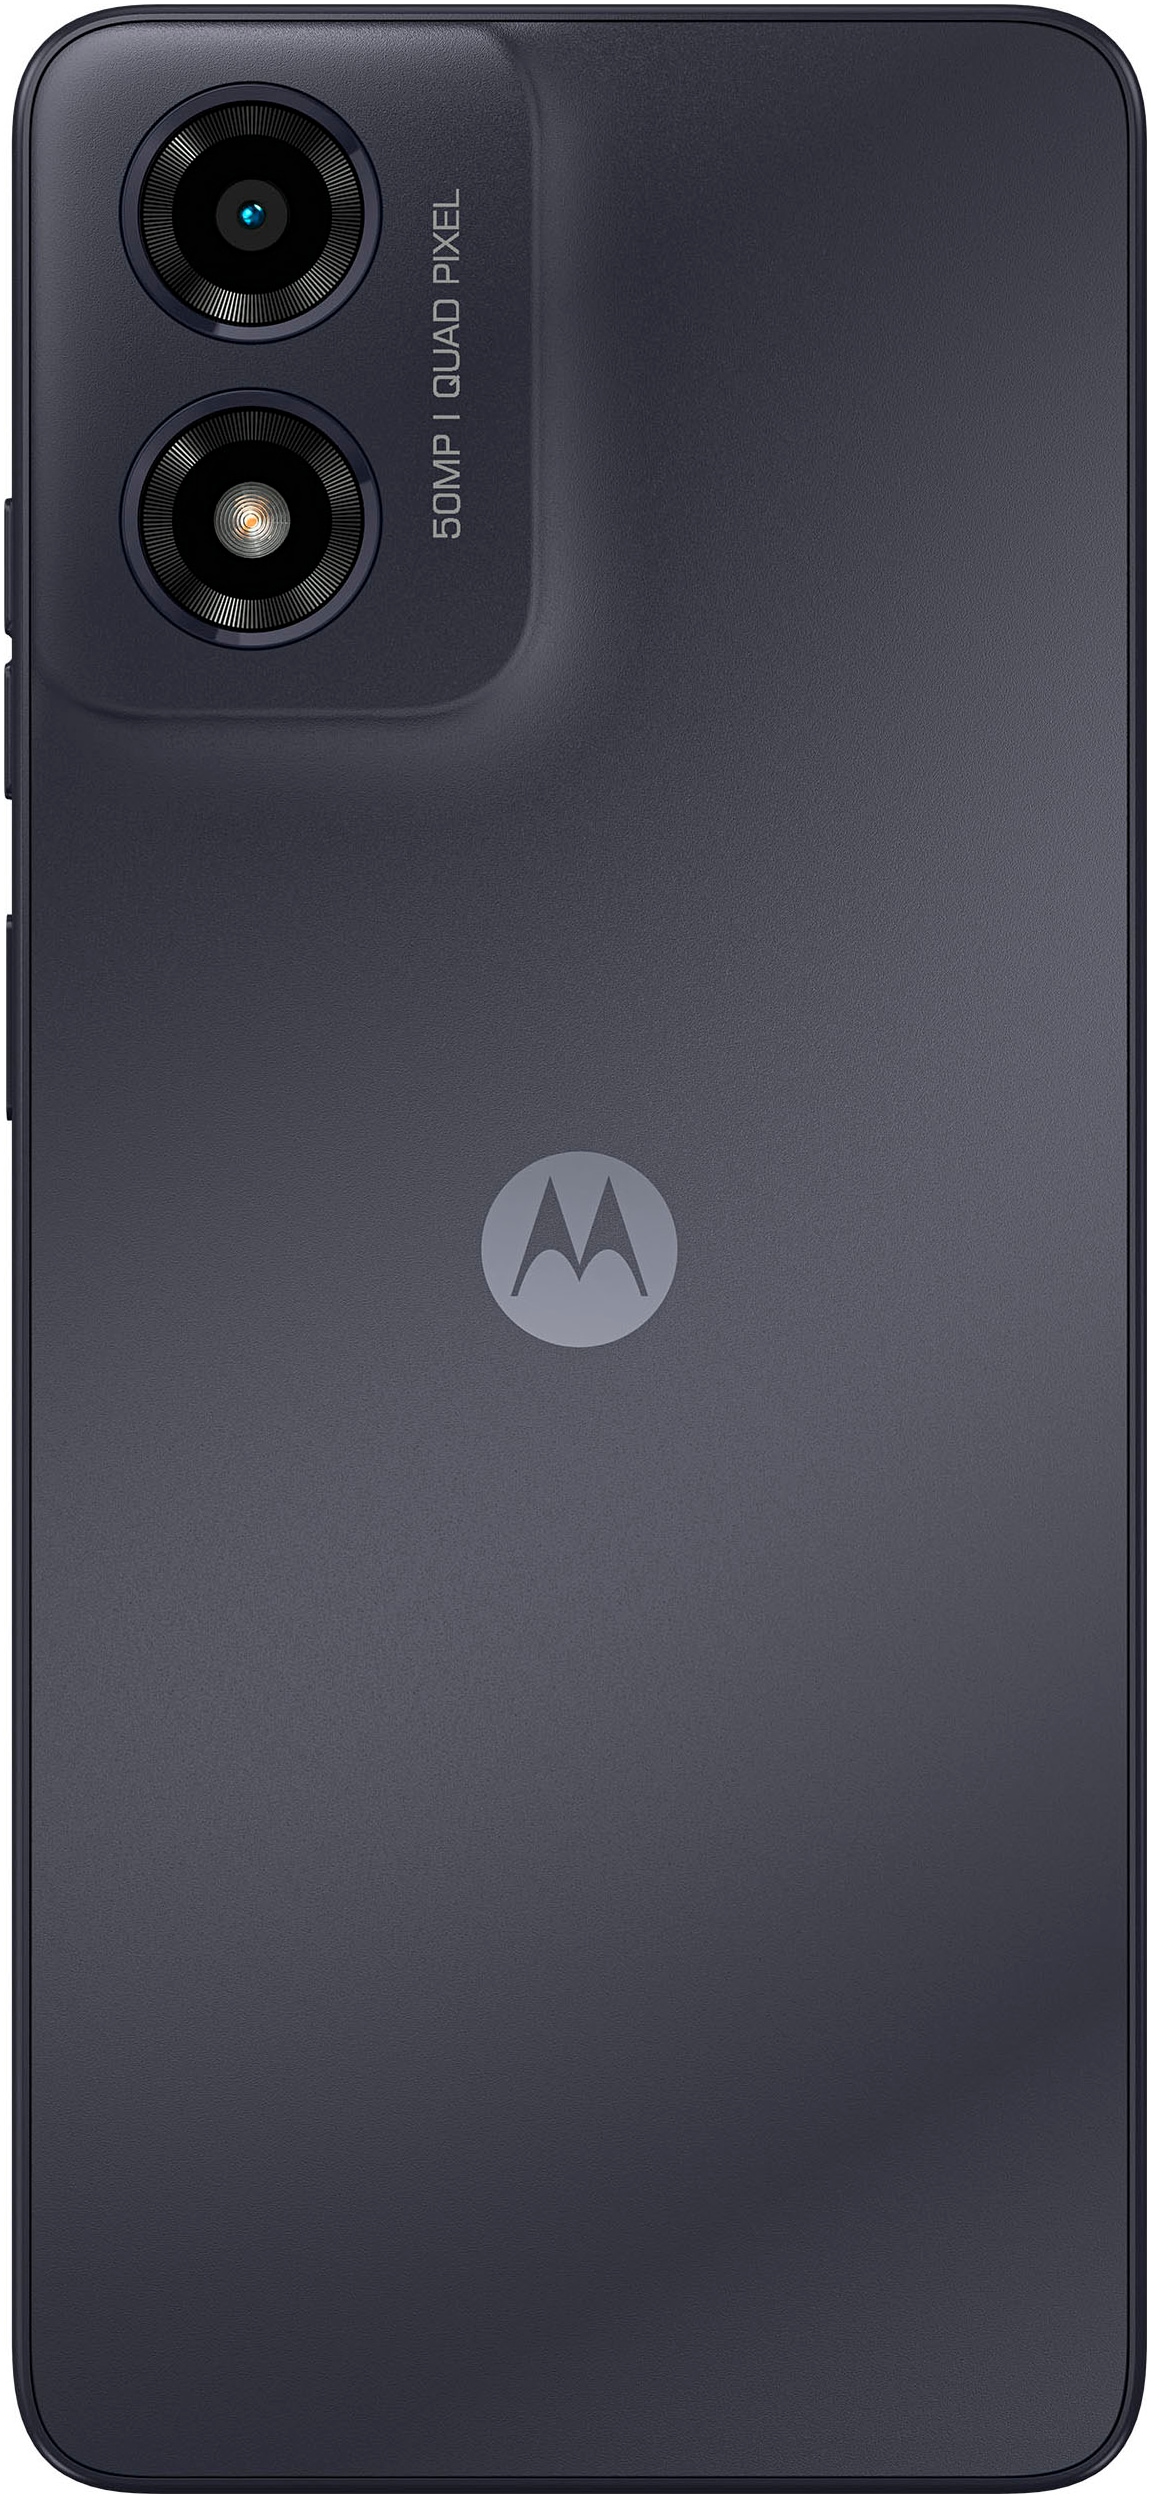 Motorola Smartphone »moto G04s 64GB«, Concord Schwarz, 16,67 cm/6,6 Zoll, 64 GB Speicherplatz, 50 MP Kamera